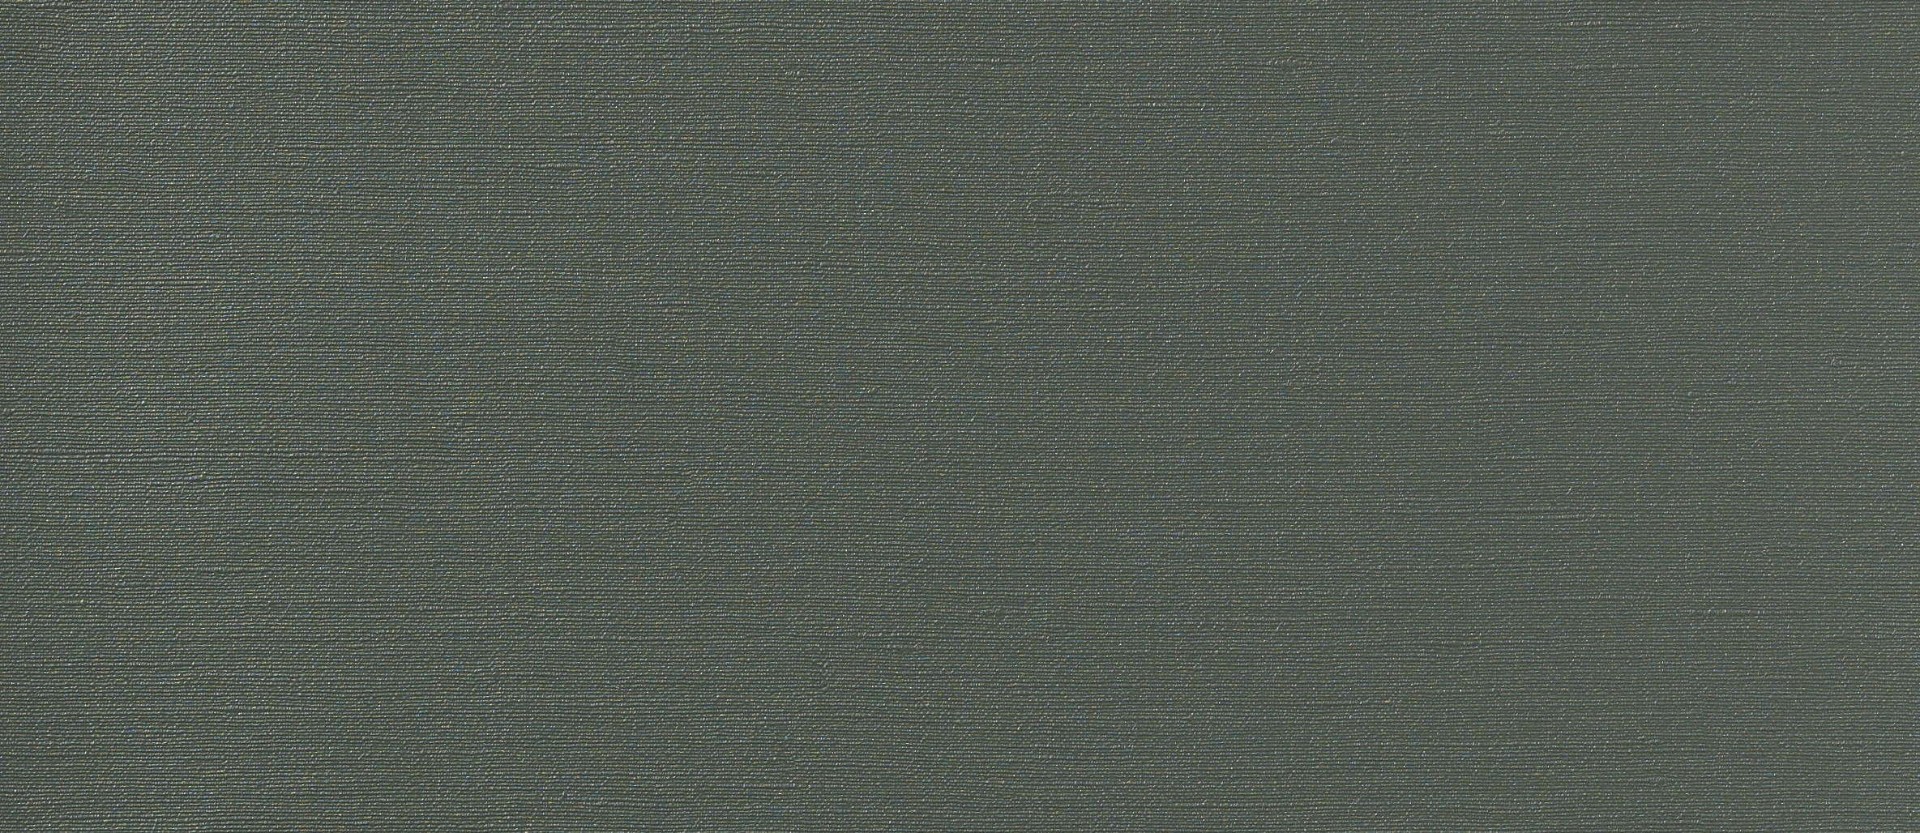 Обивочная ткань Vescom Dalma 7024.13